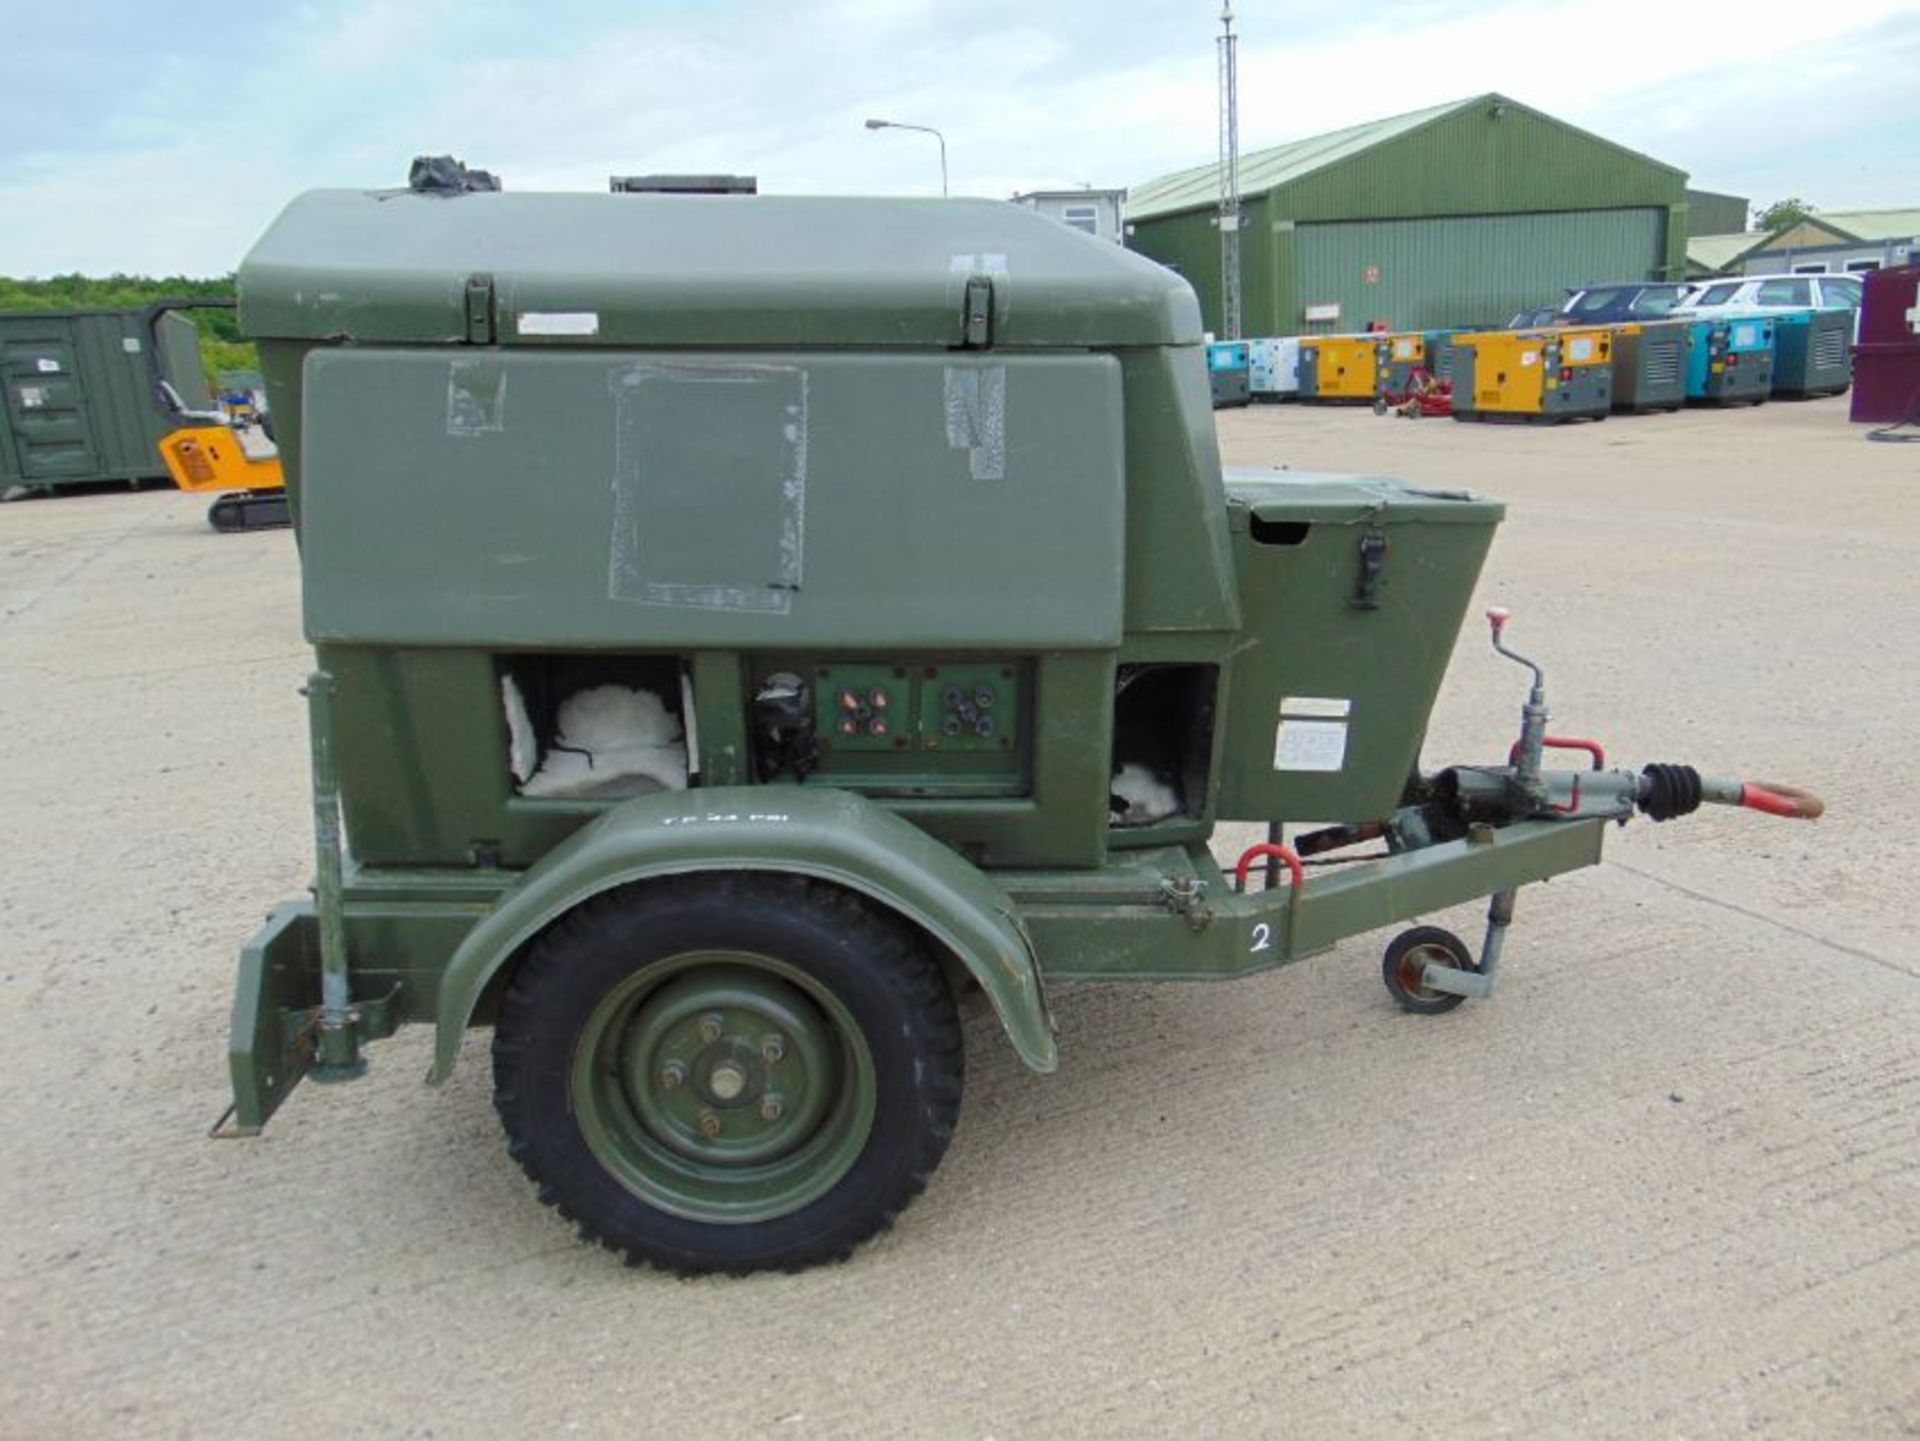 Ex Uk Royal Air Force Trailer Mounted 25 KVA Generator - Image 4 of 14